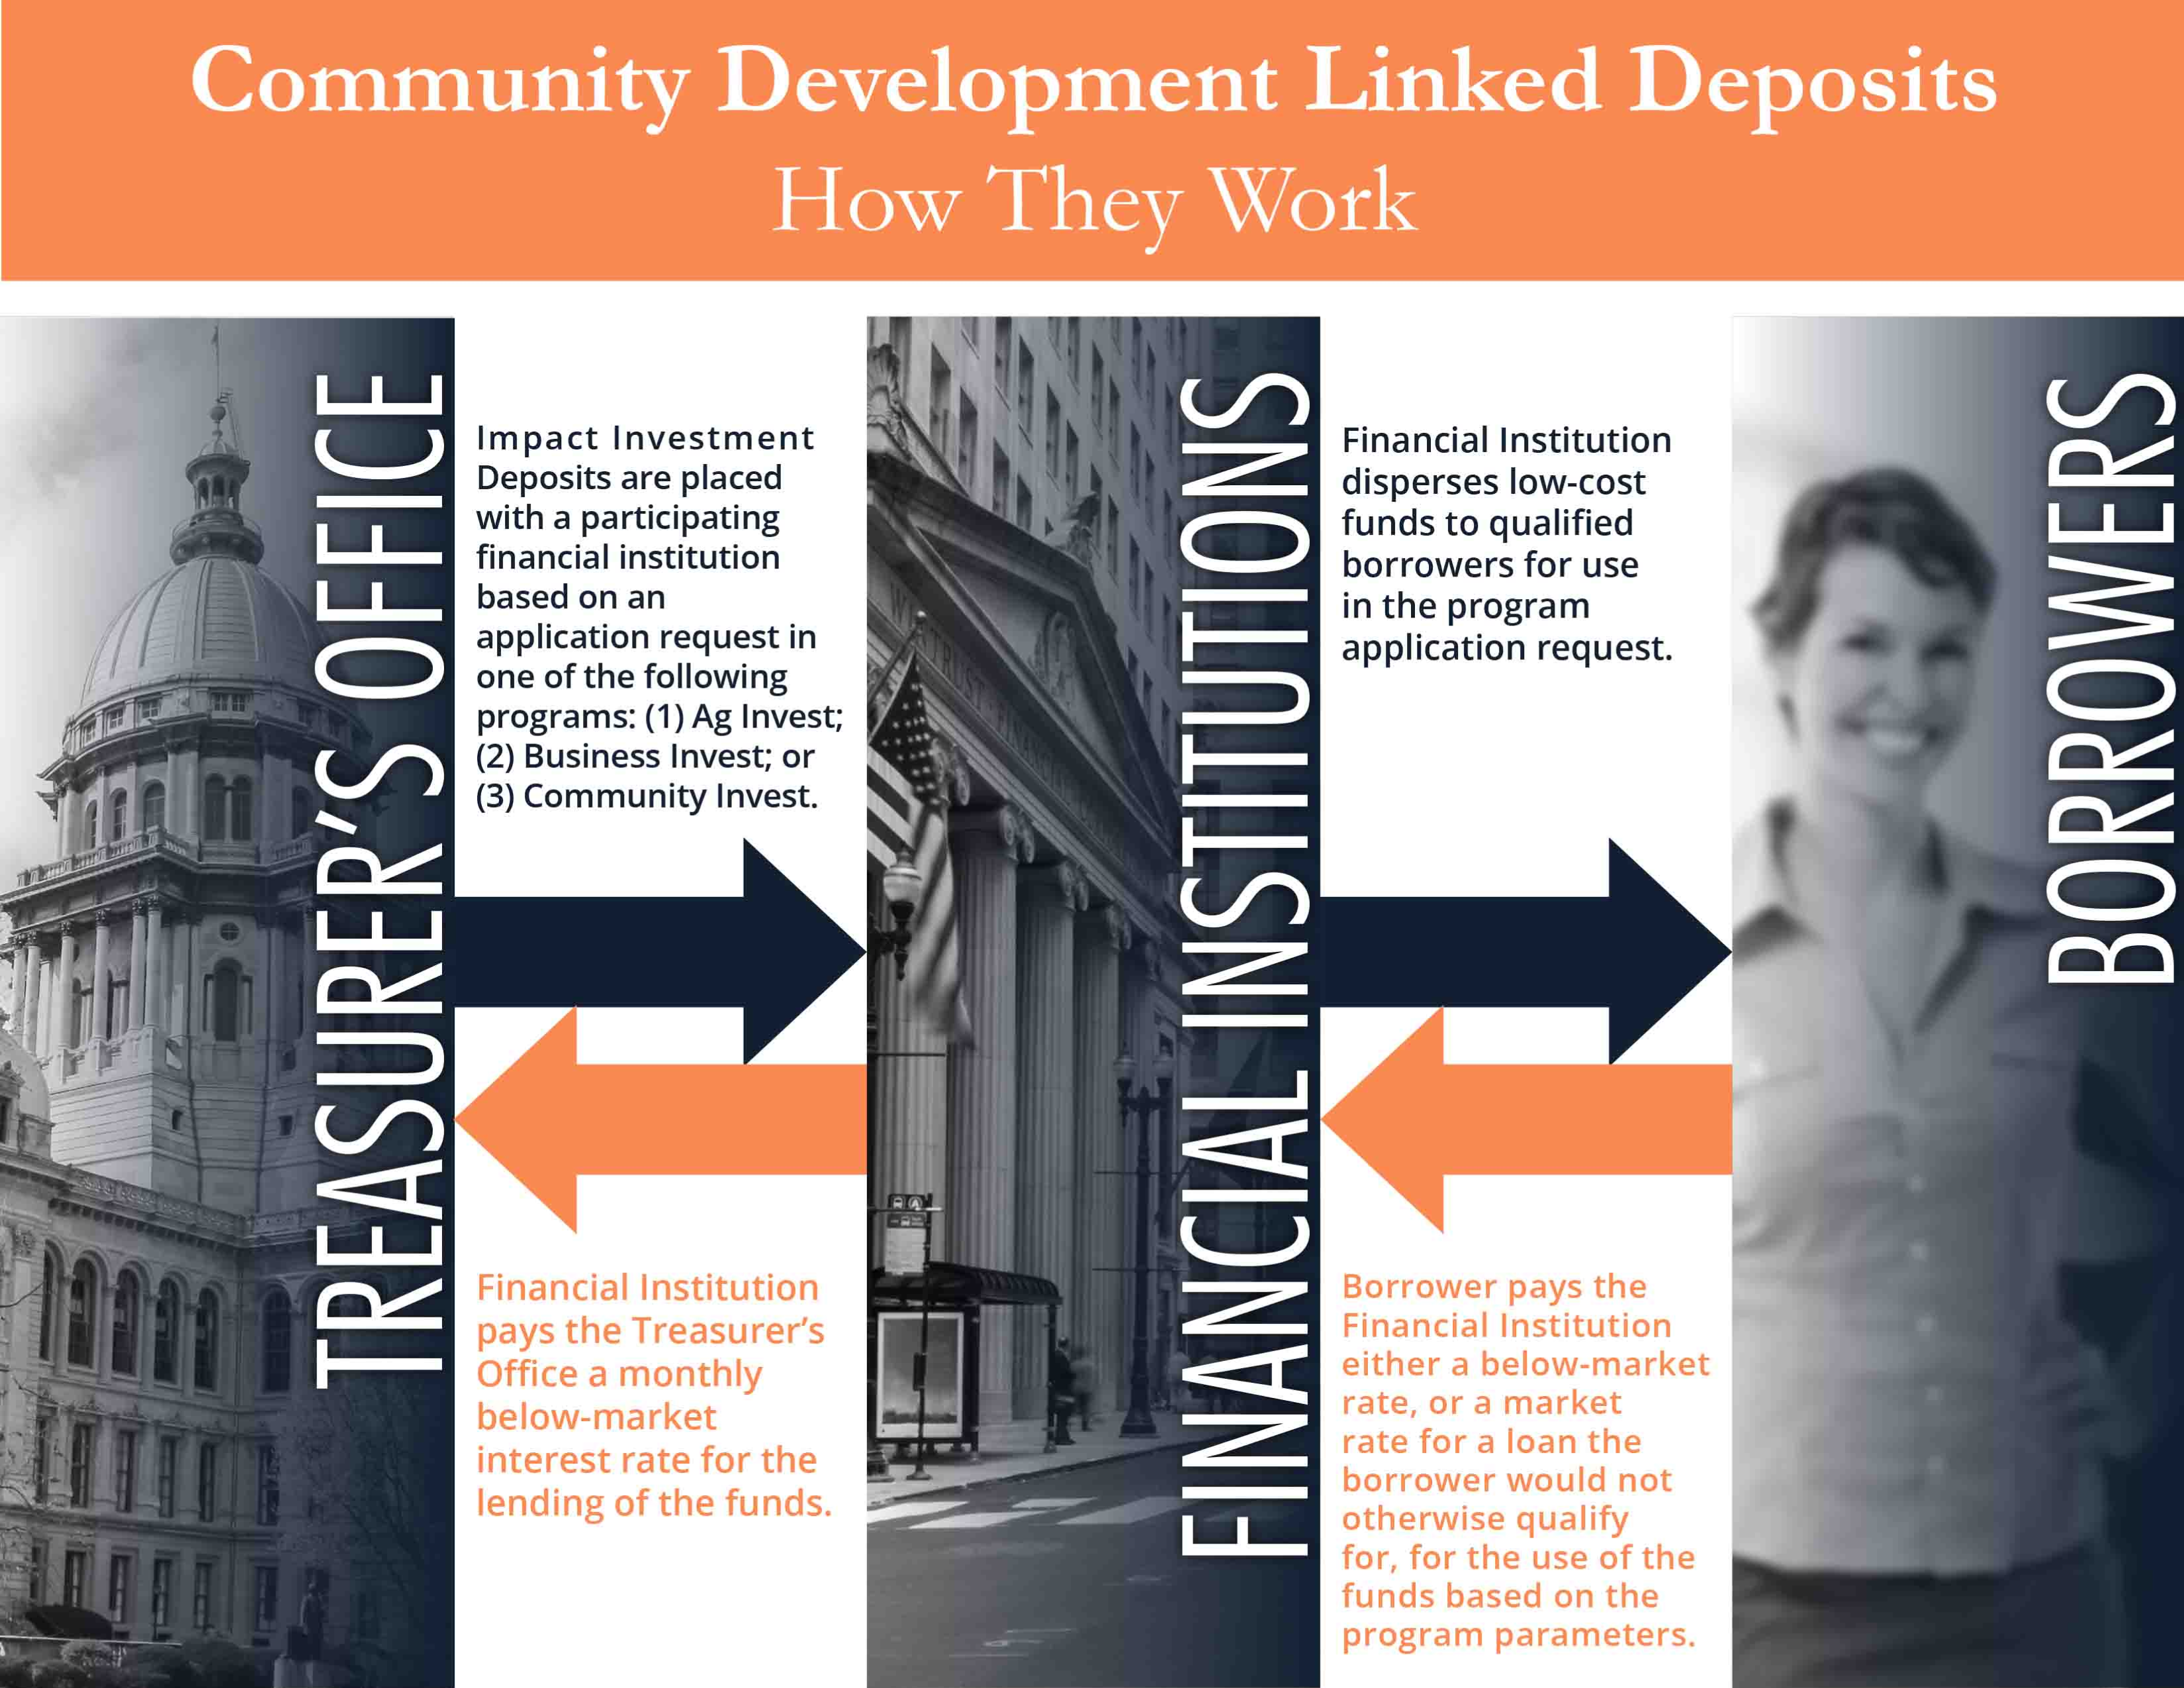 How Community Development Linked Deposits Work